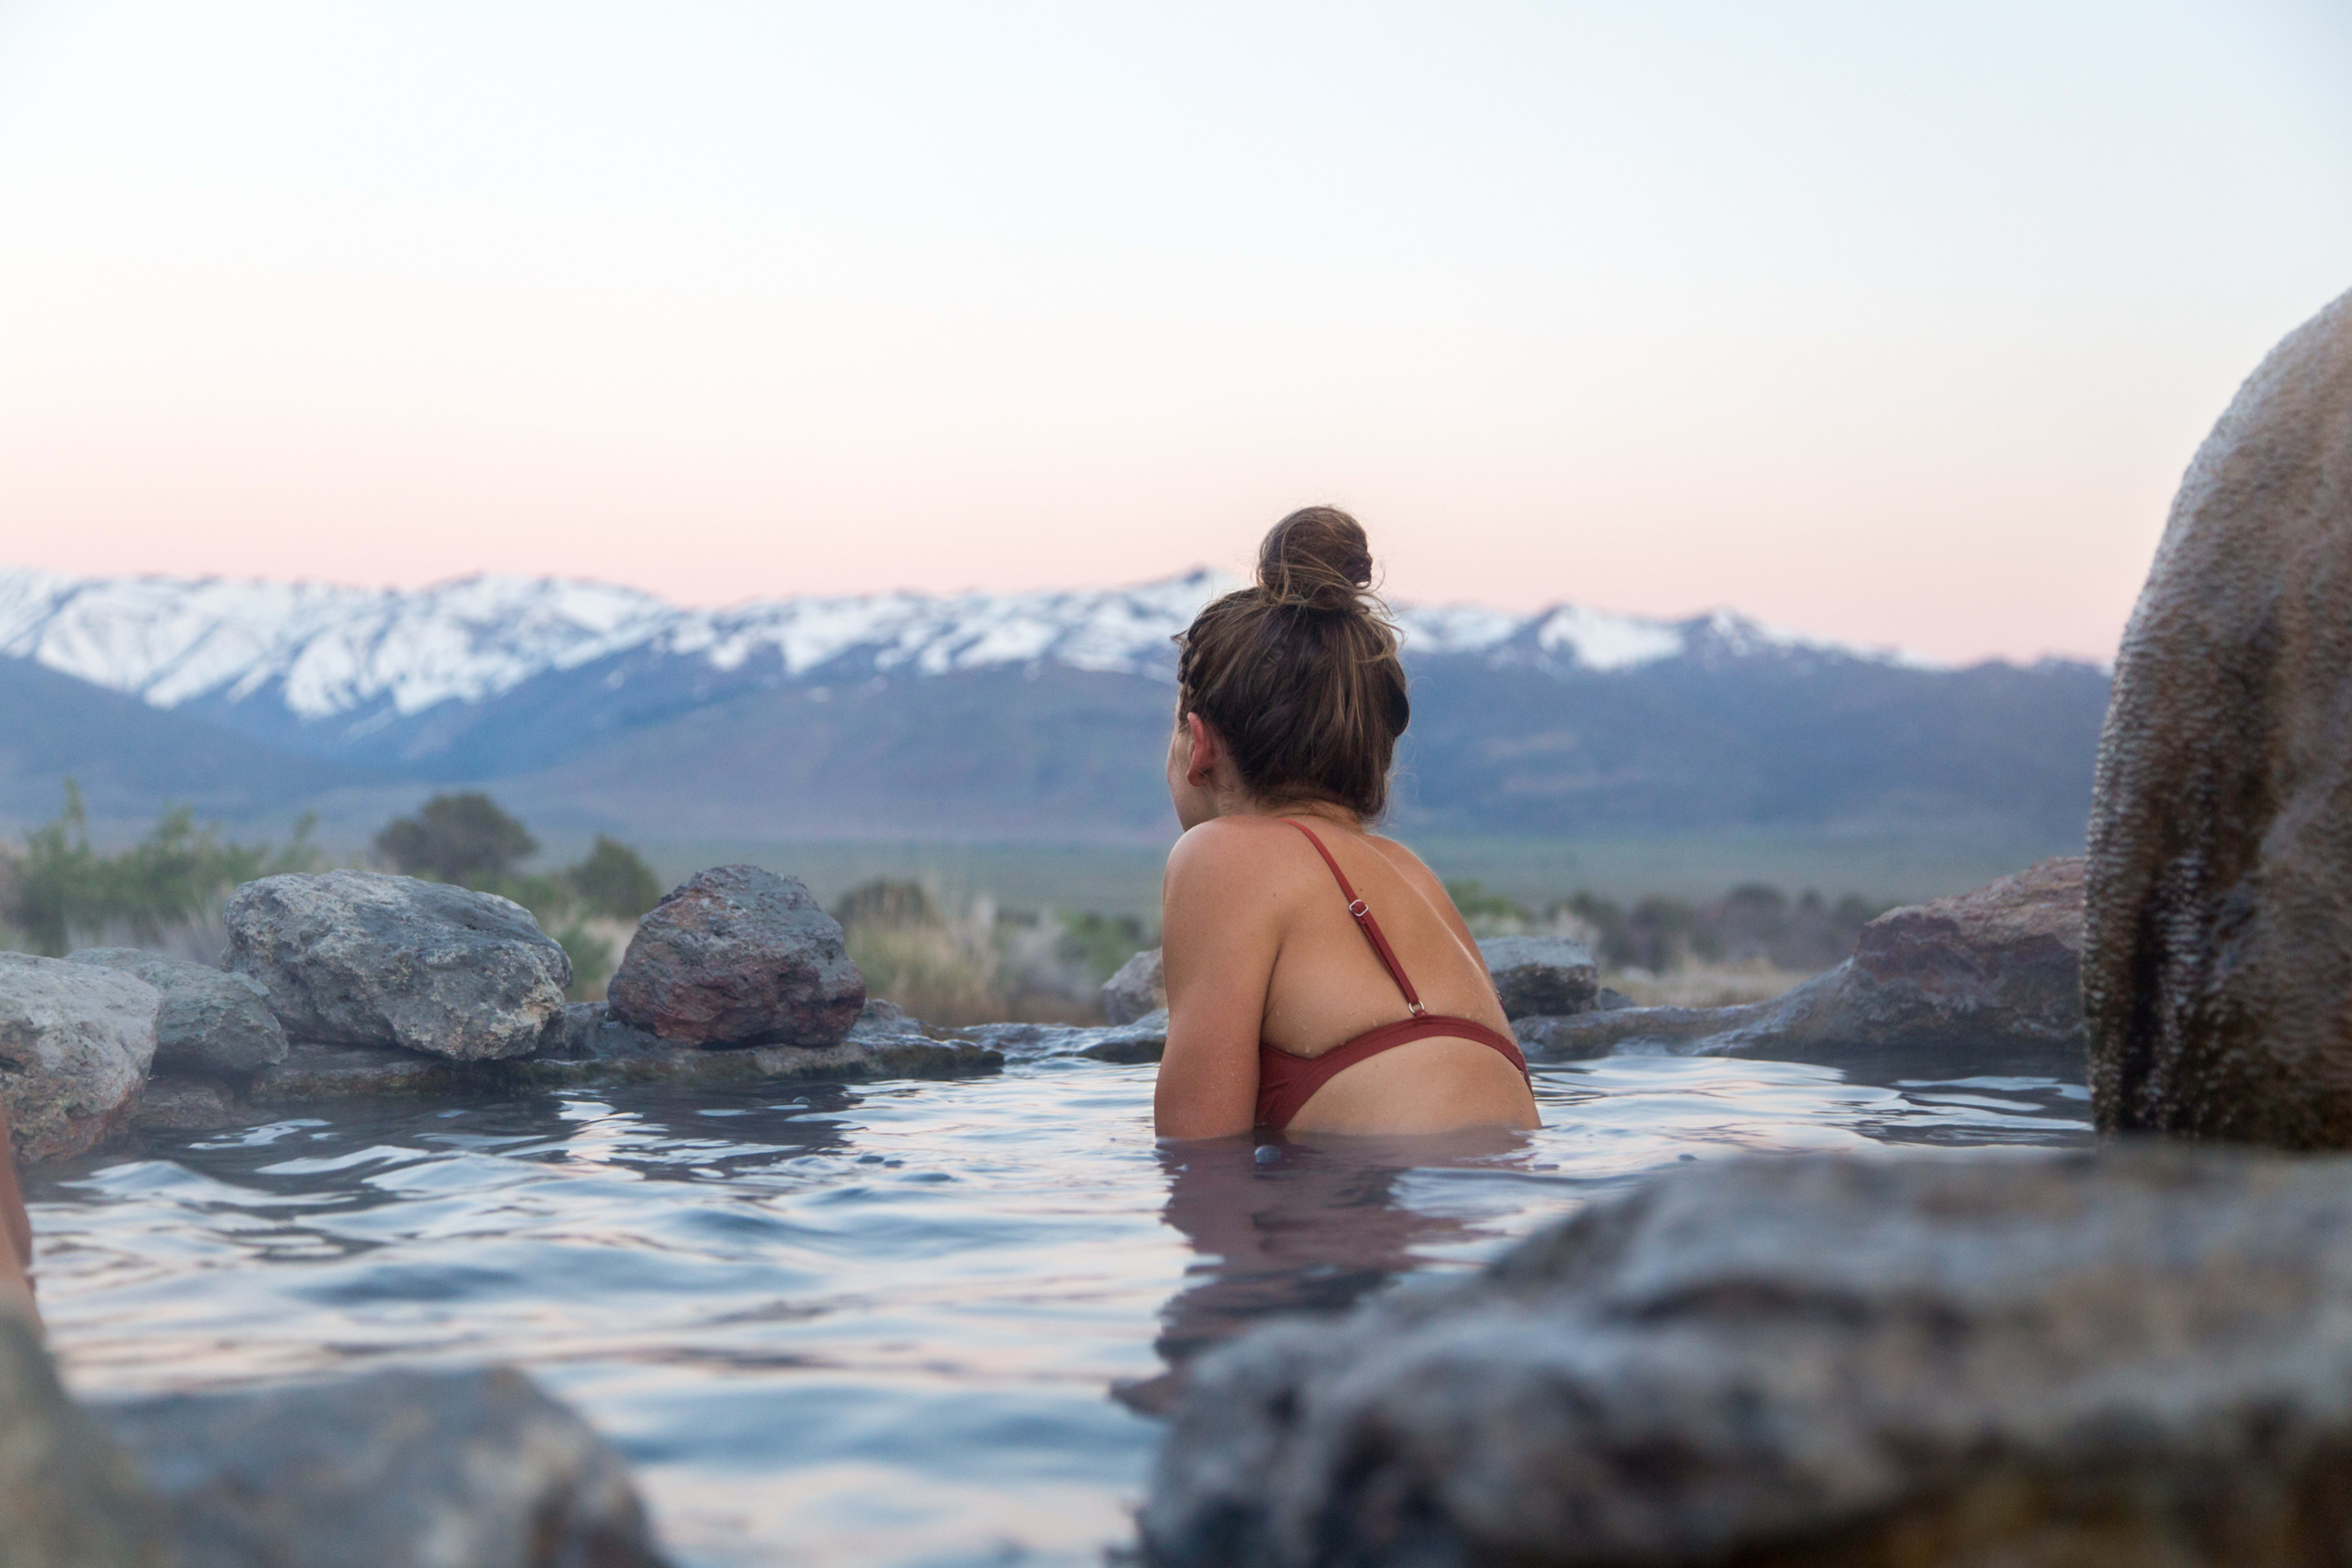 Road Trip-Worthy Hot Springs of the American West